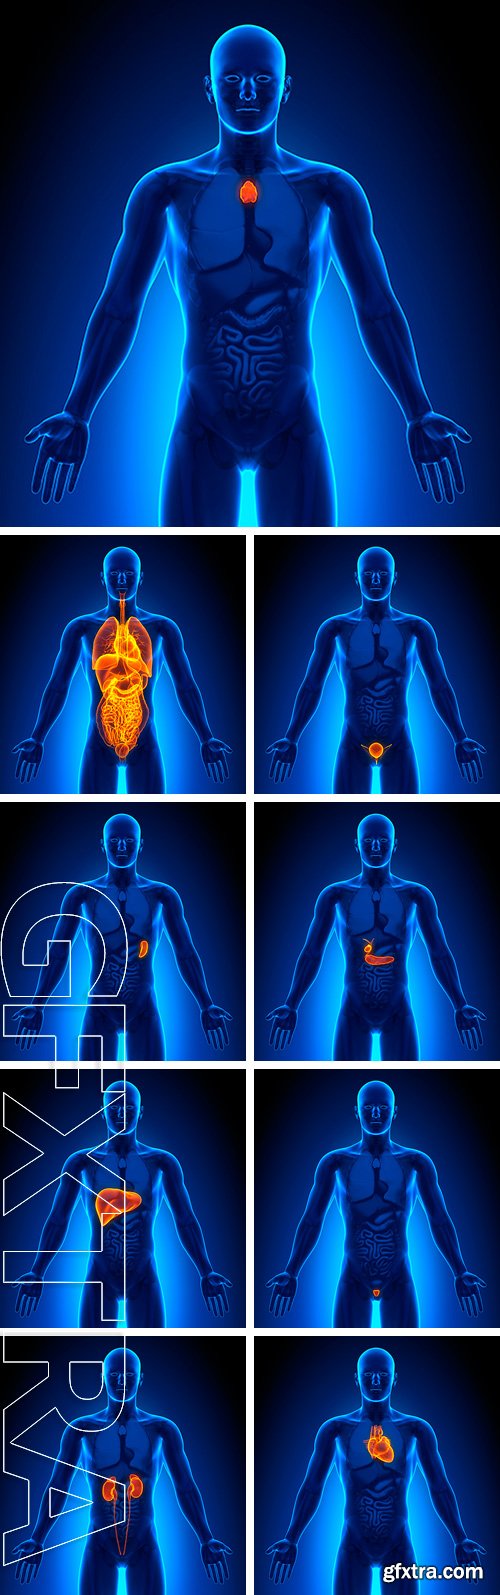 Stock Photos - Male Organs - Human Anatomy